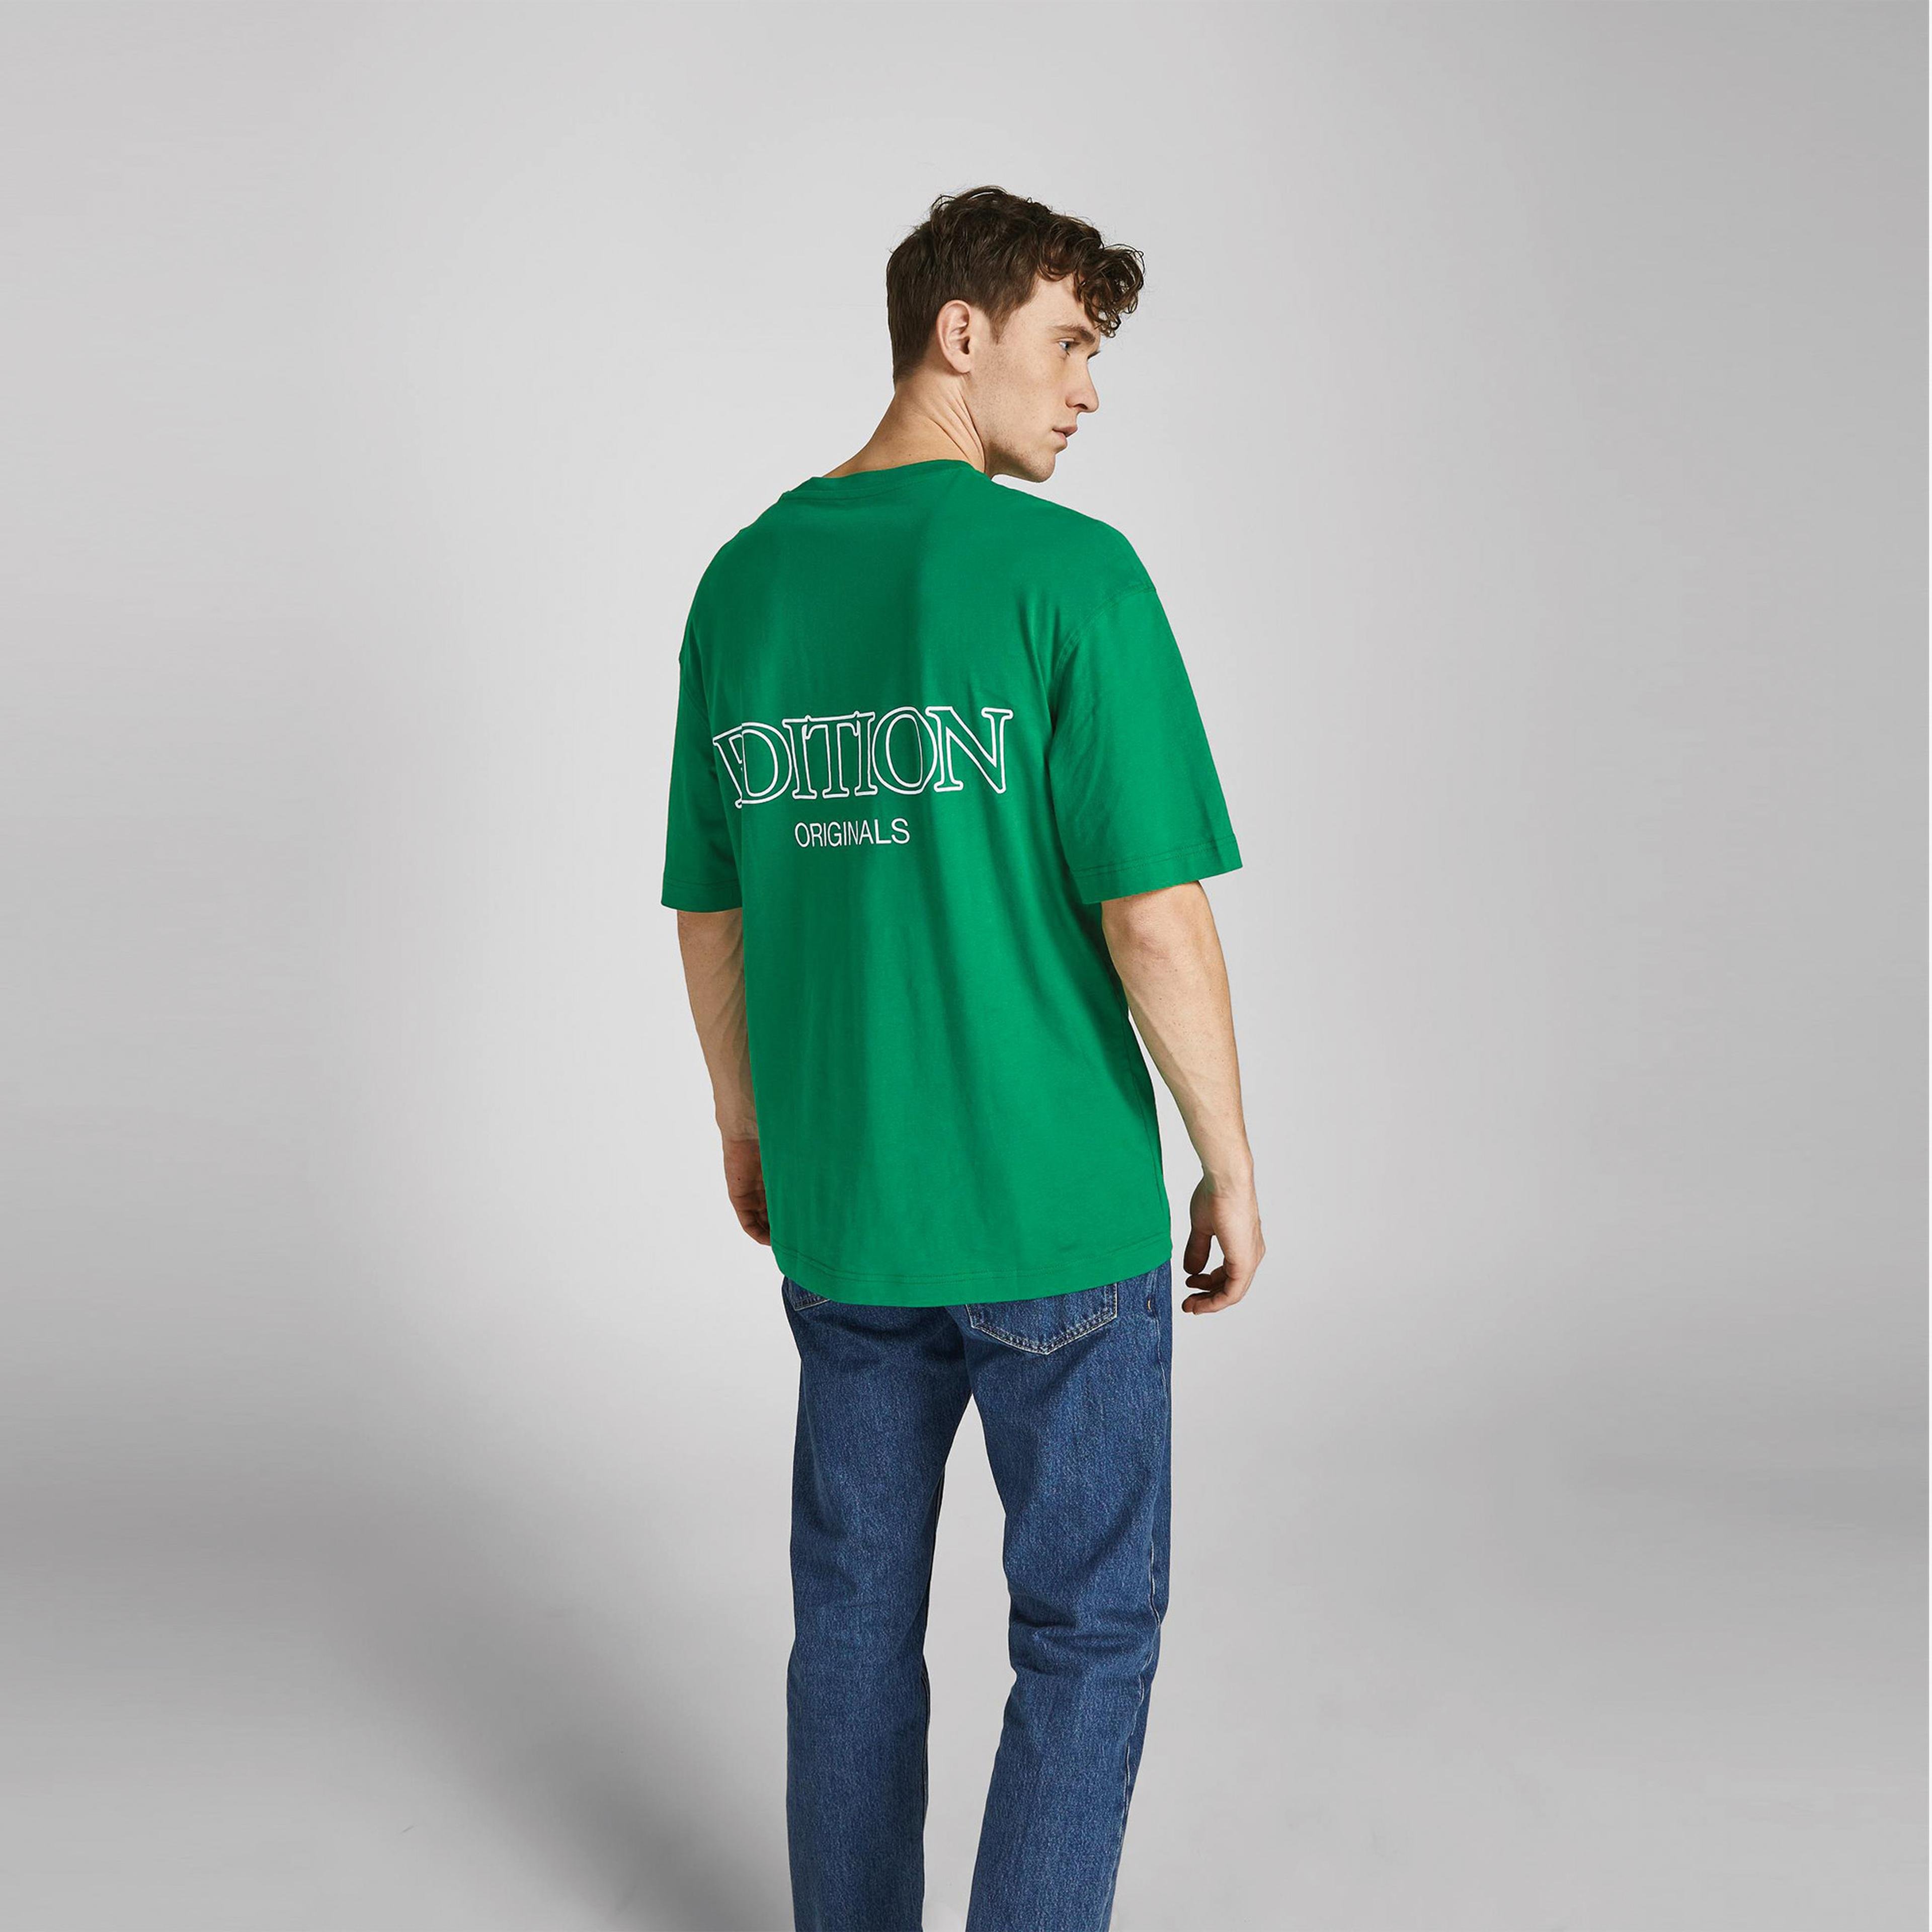 Jack & Jones Knit Erkek Yeşil T-Shirt